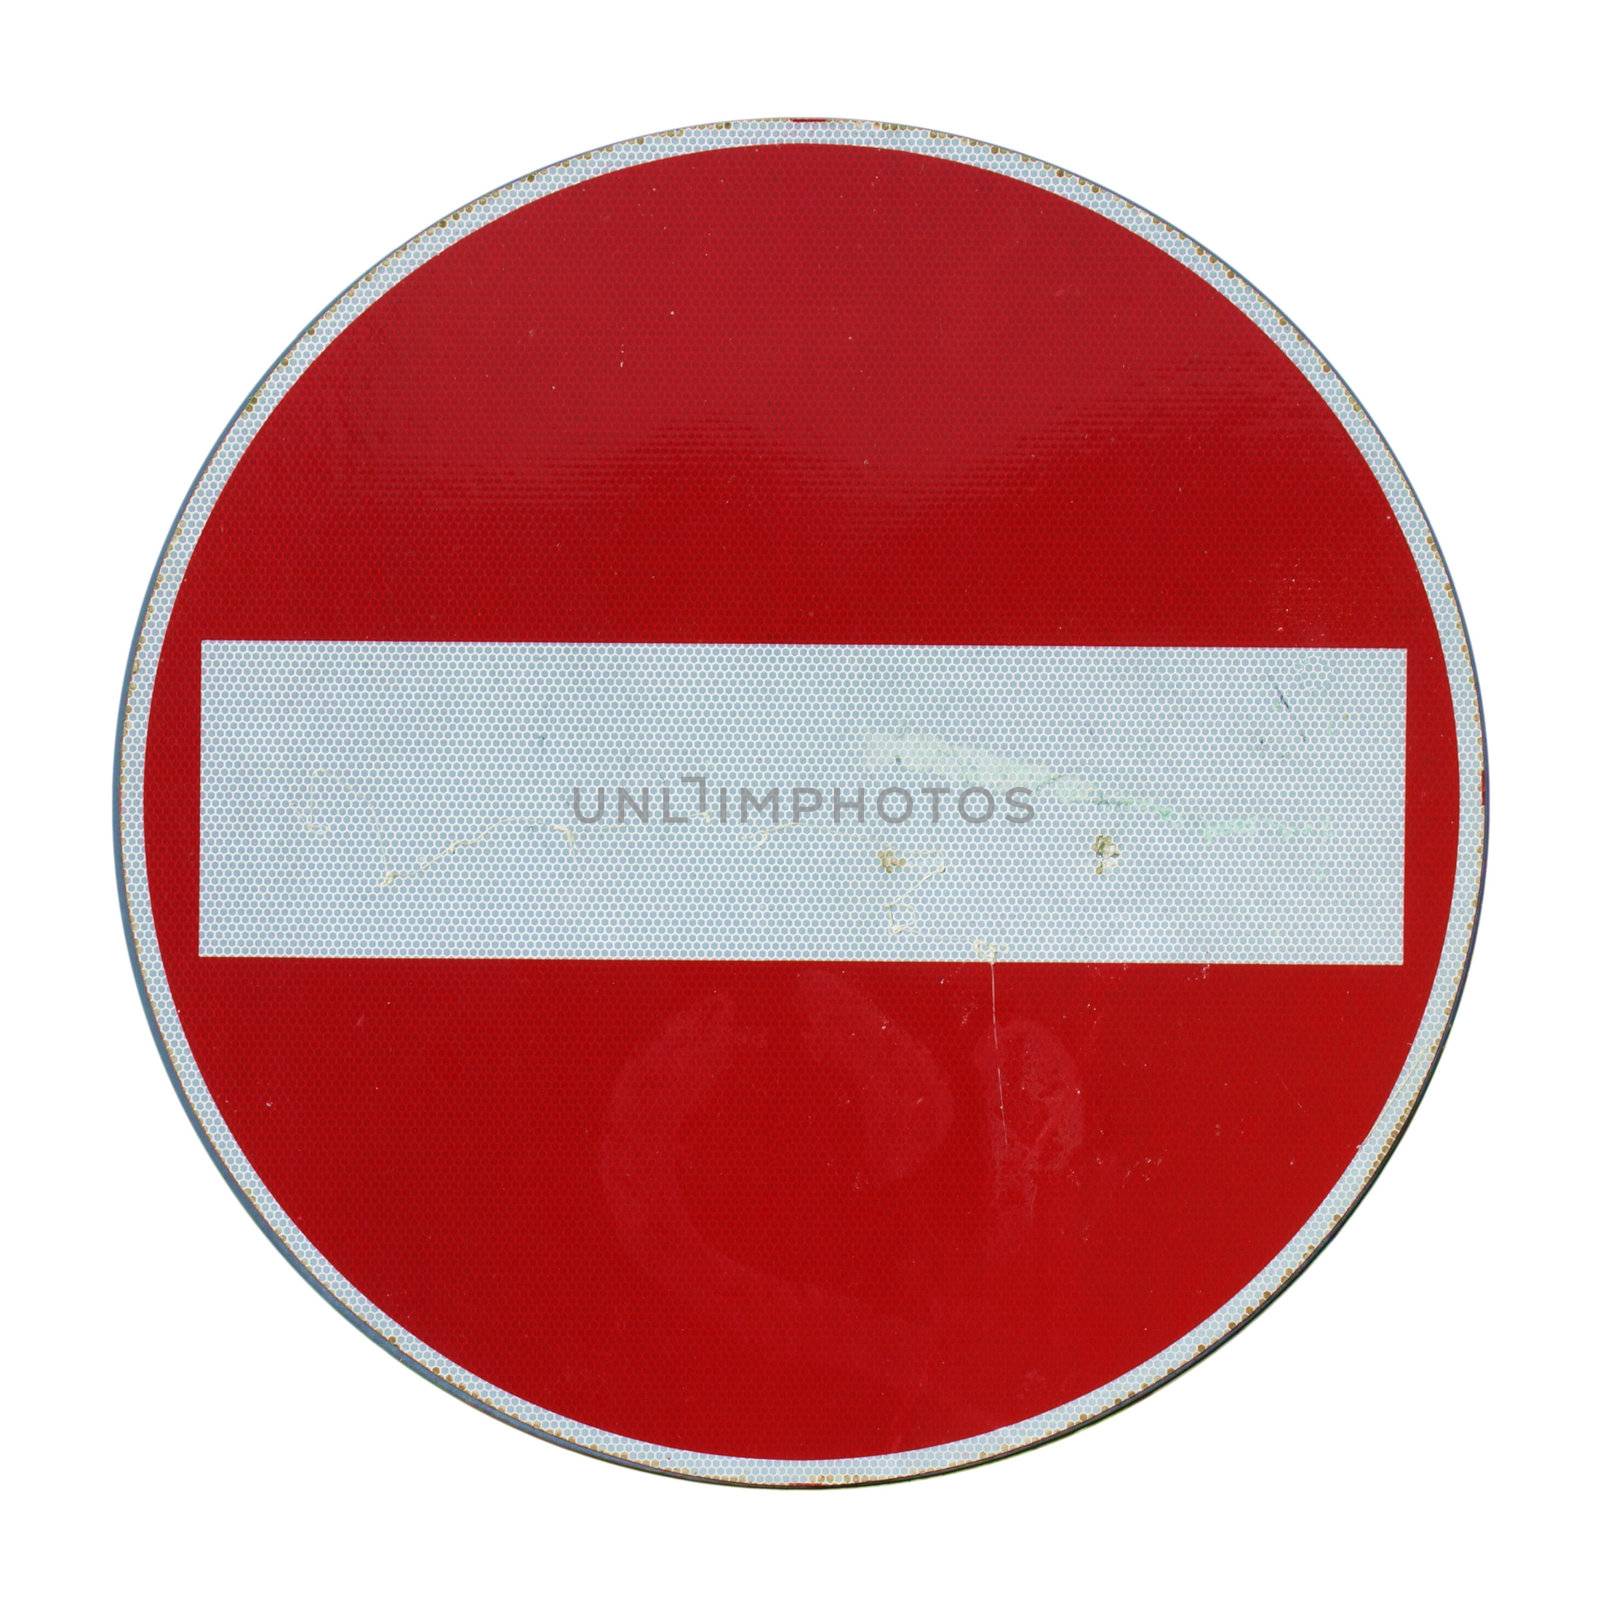 No entry sign by claudiodivizia